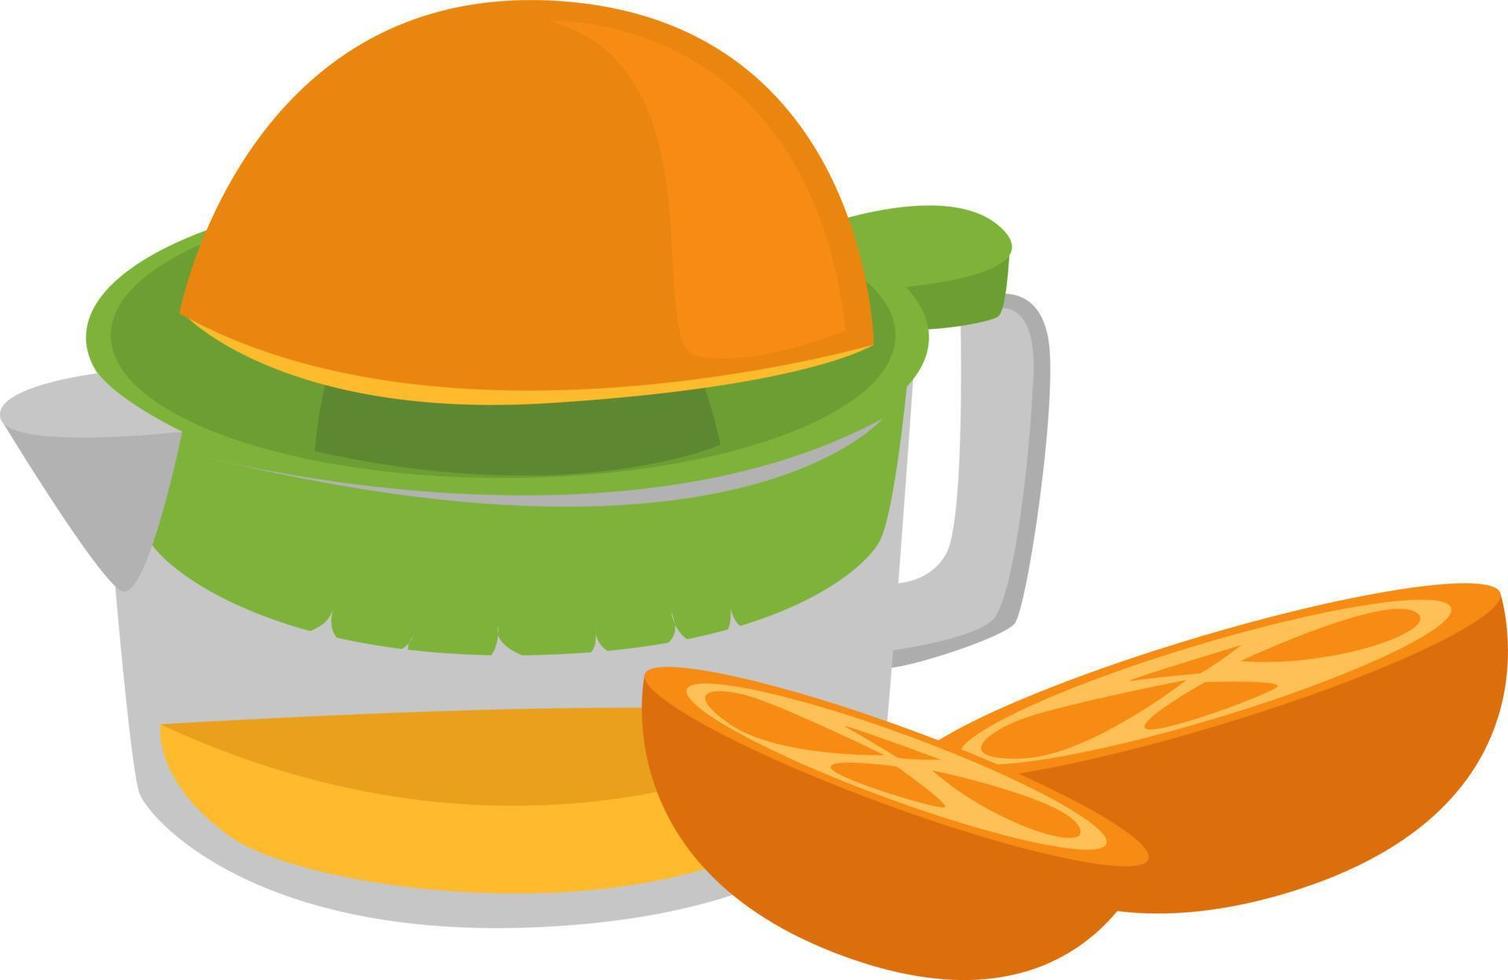 Juicer with oranges, illustration, vector on white background